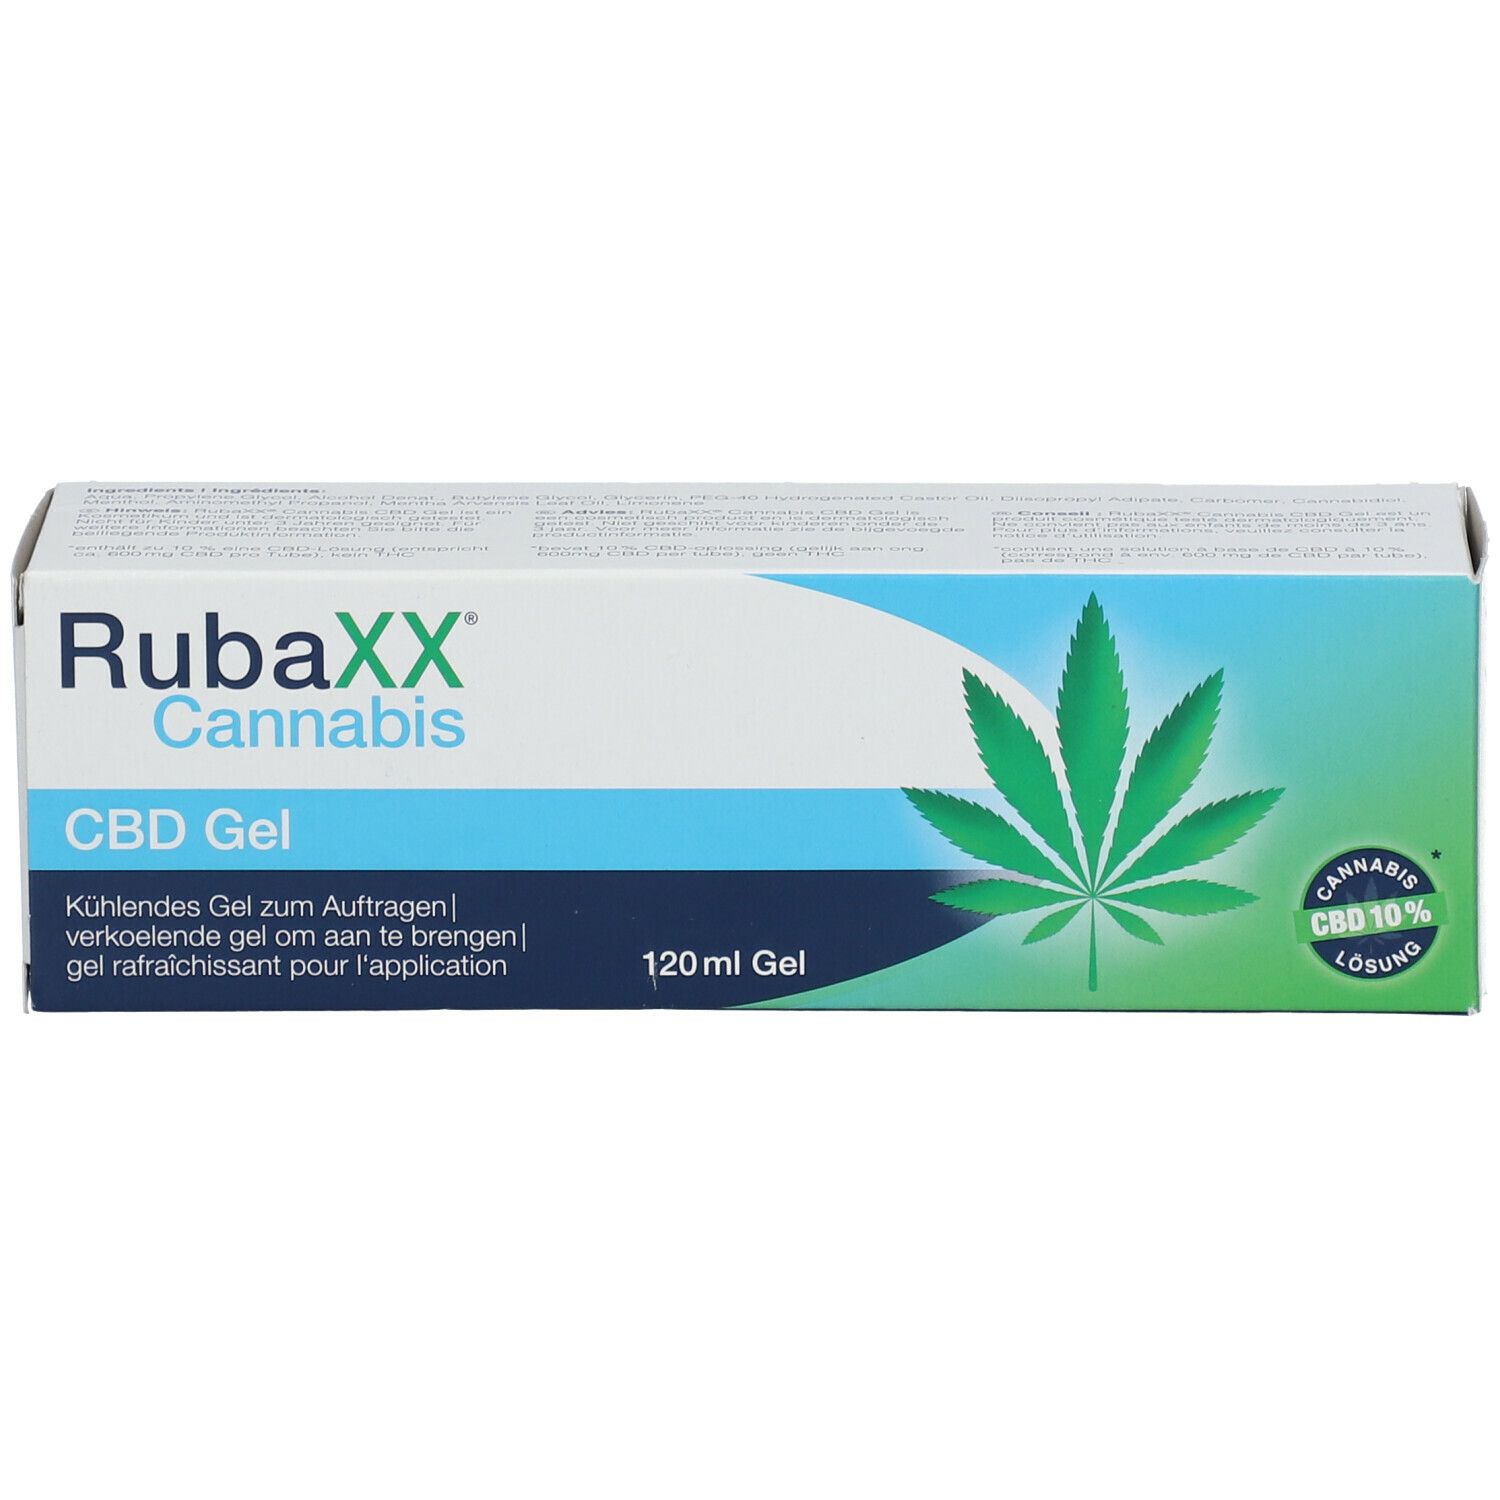 Rubaxx® Cannabis CBD Gel